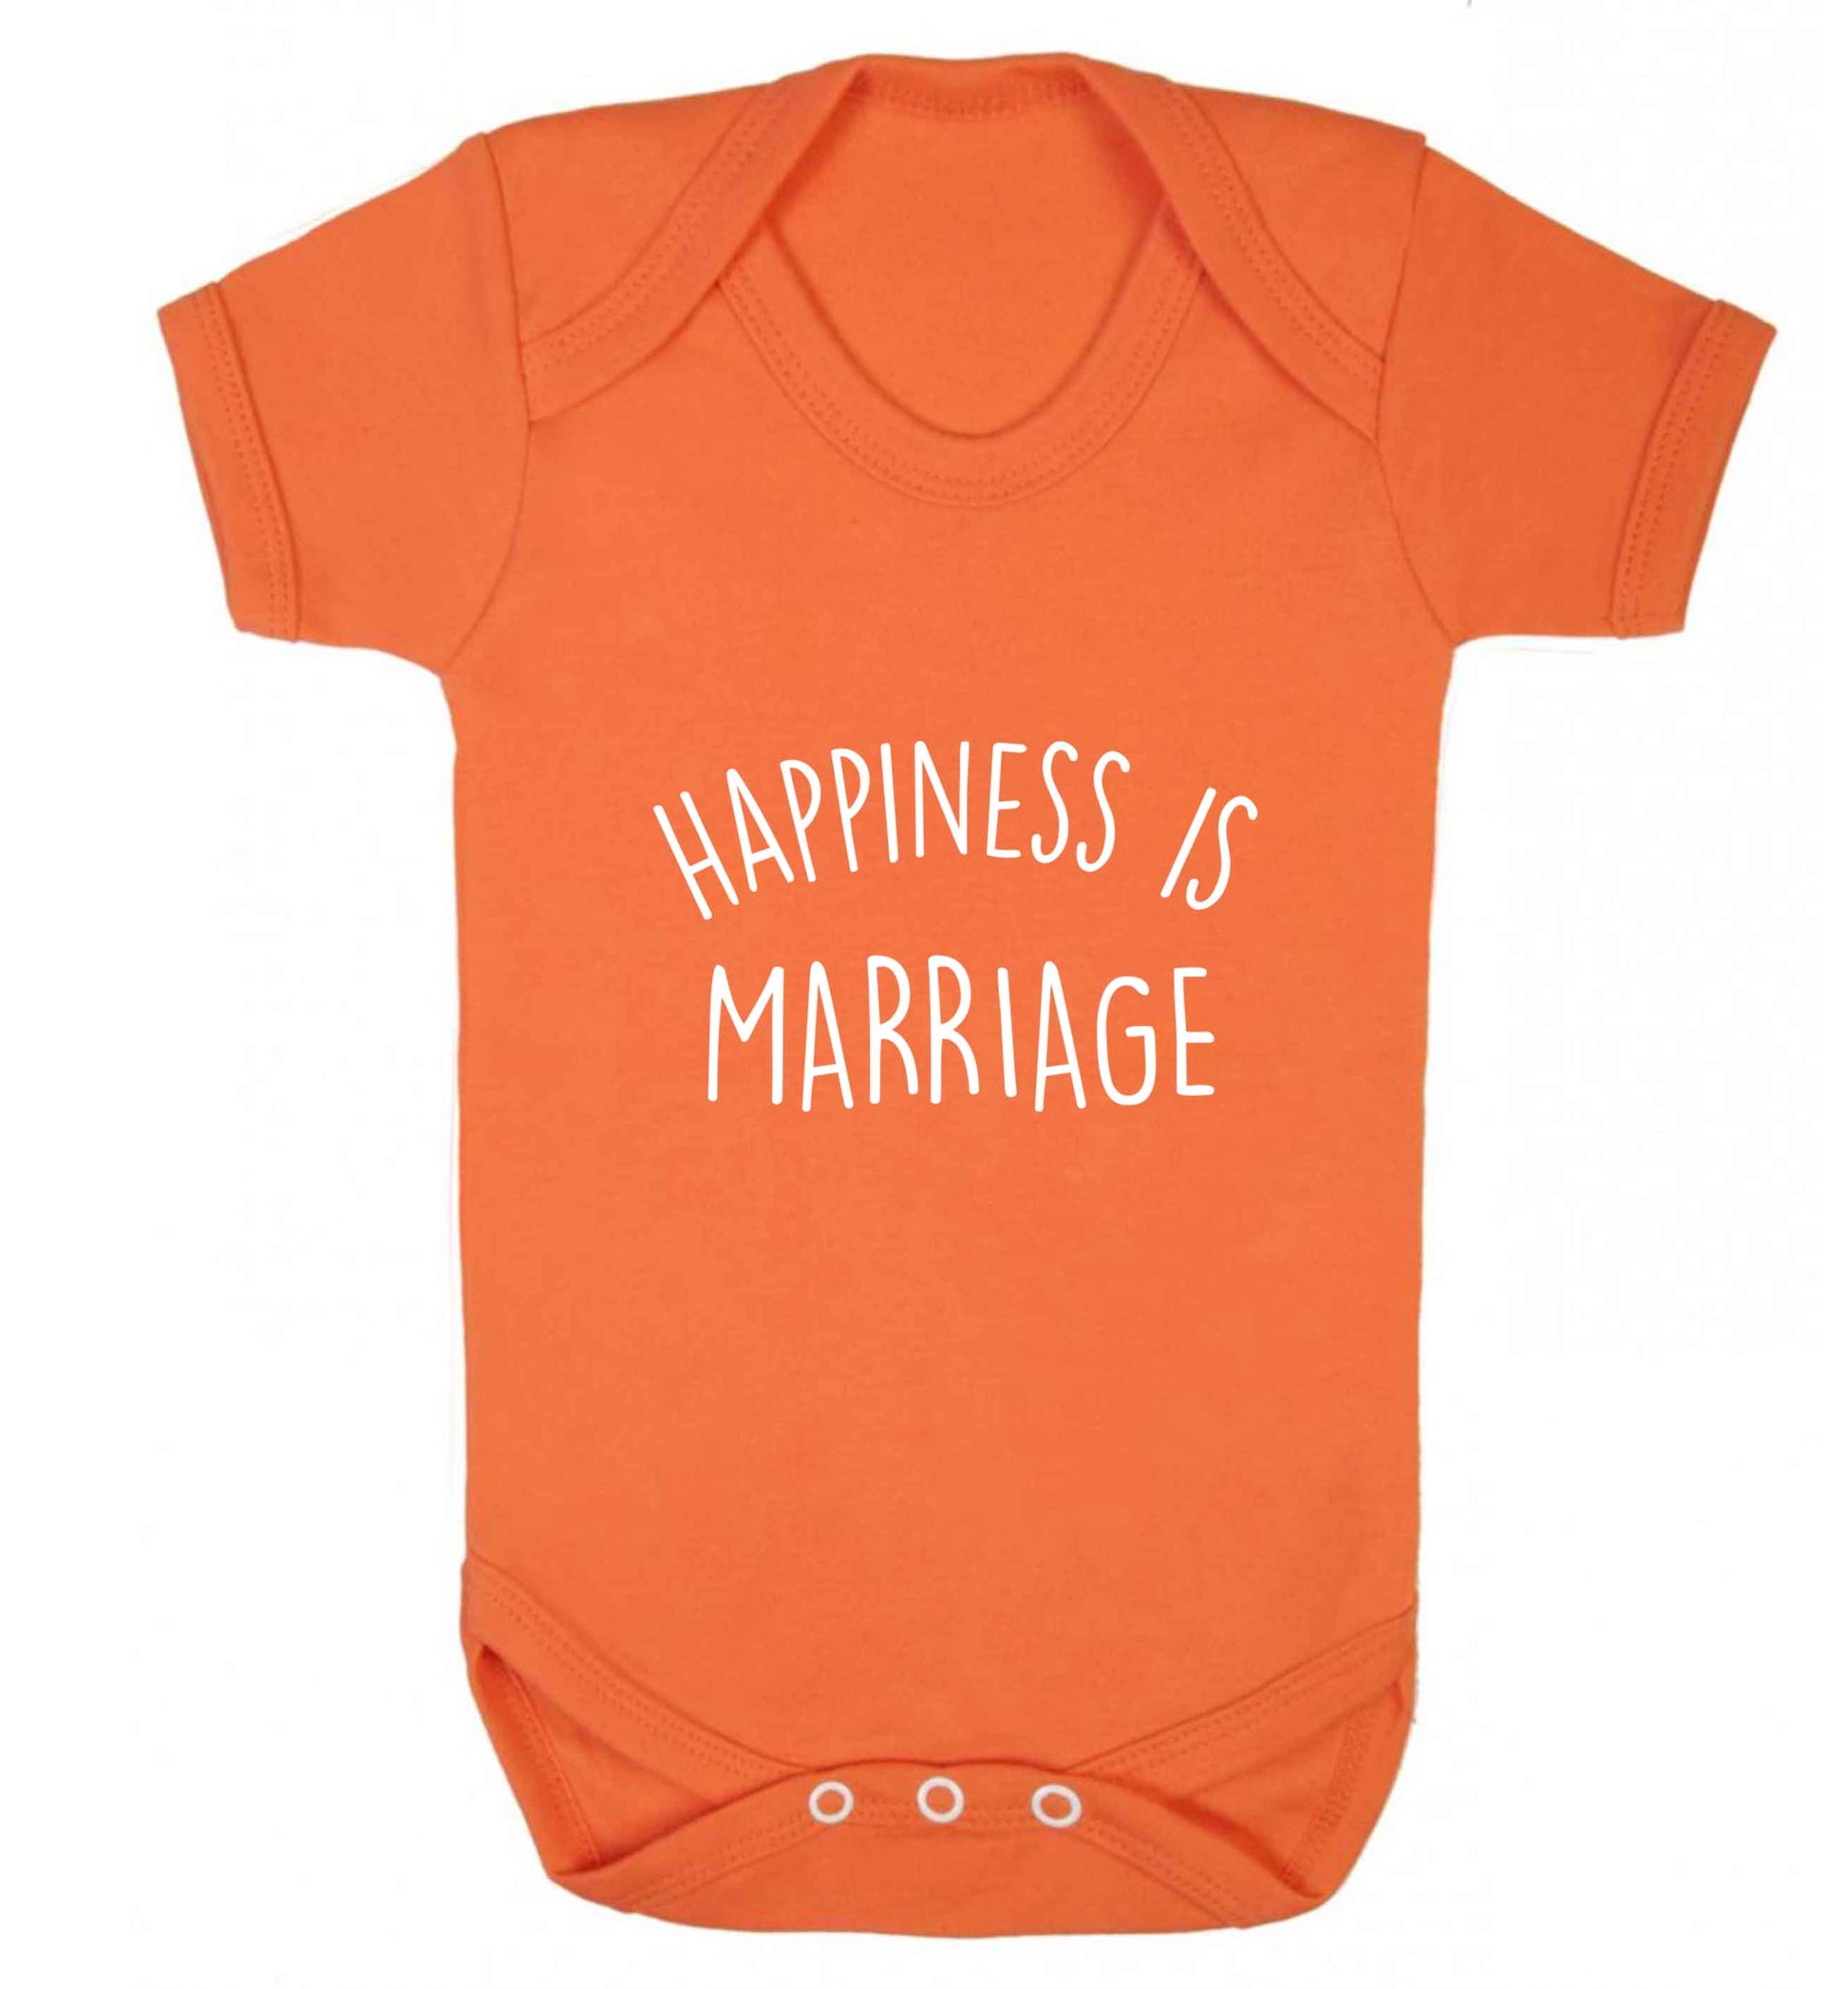 Happiness is wedding planning baby vest orange 18-24 months